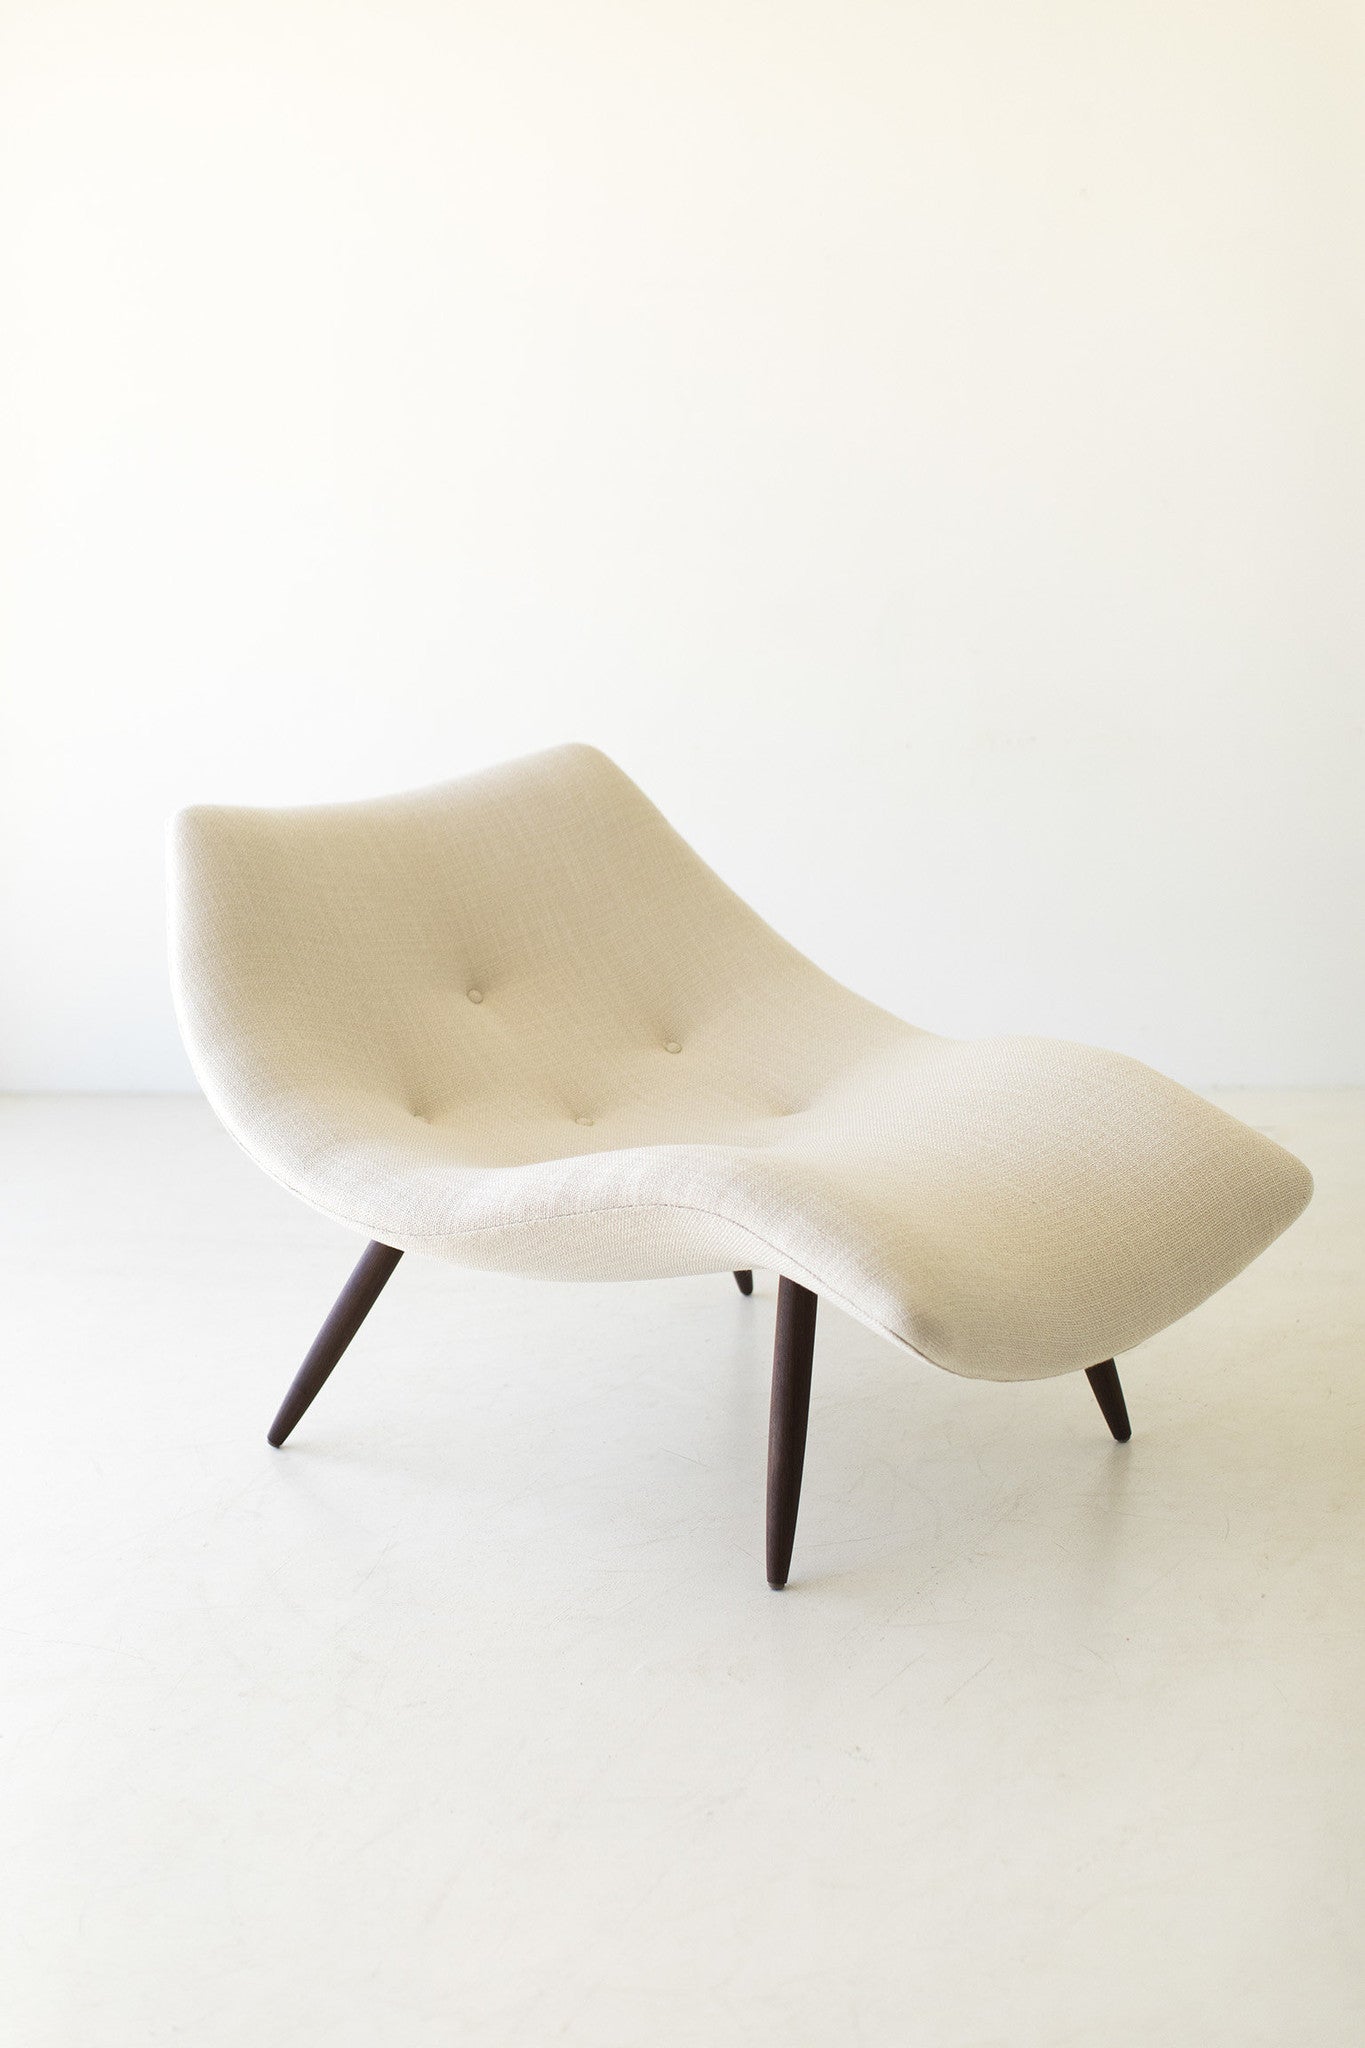 modern-chaise-lounge-05